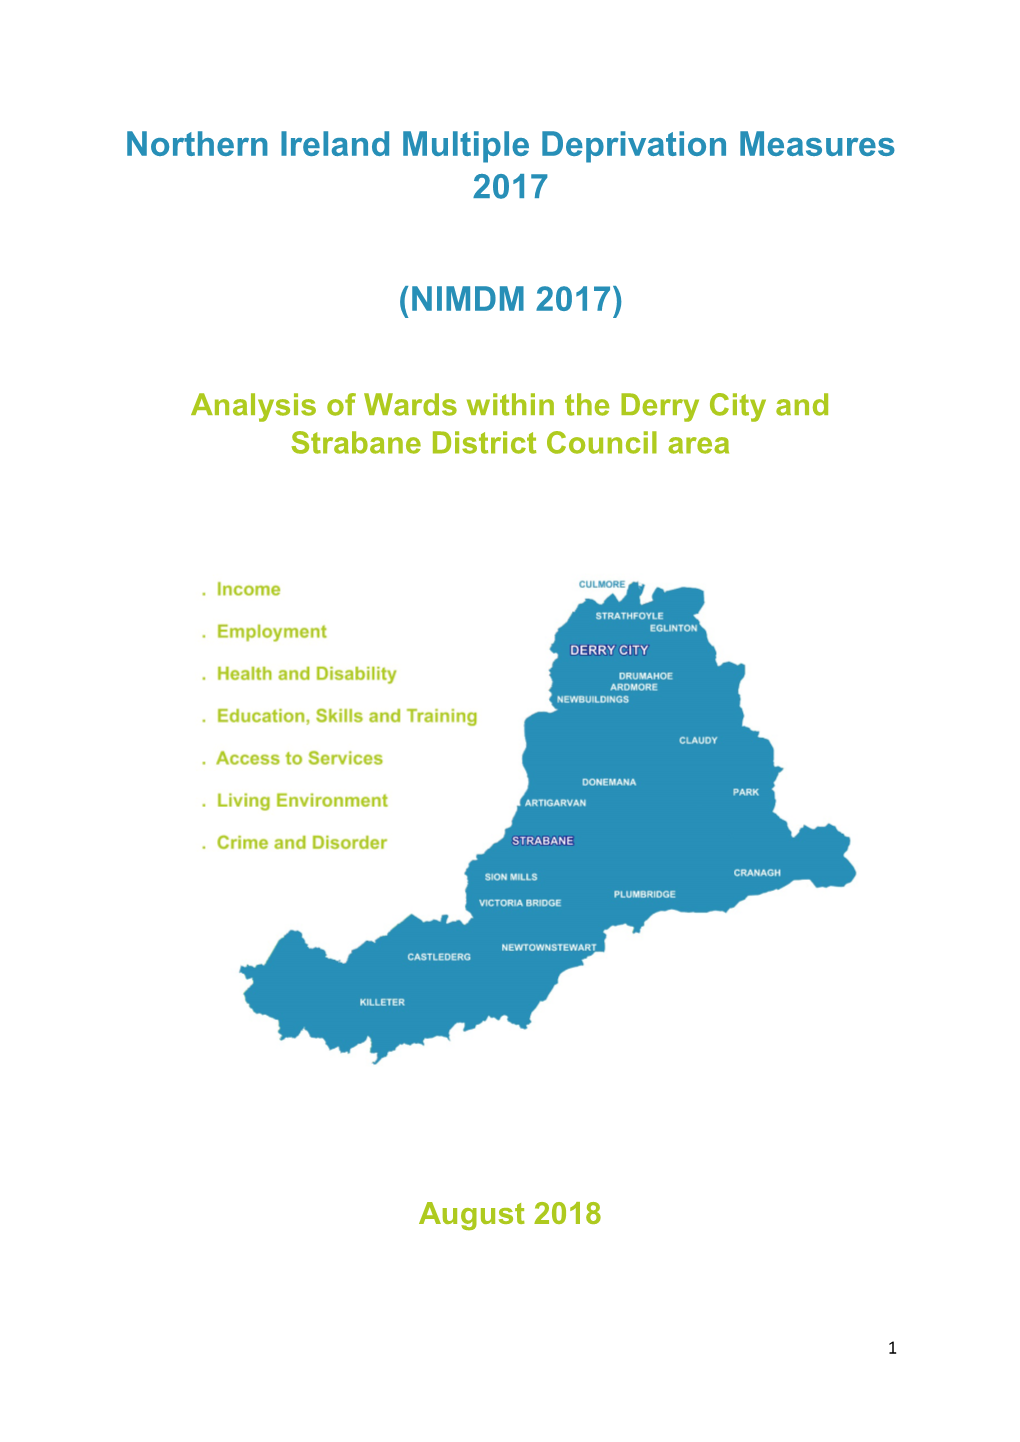 Northern Ireland Multiple Deprivation Measures 2017 (NIMDM 2017)